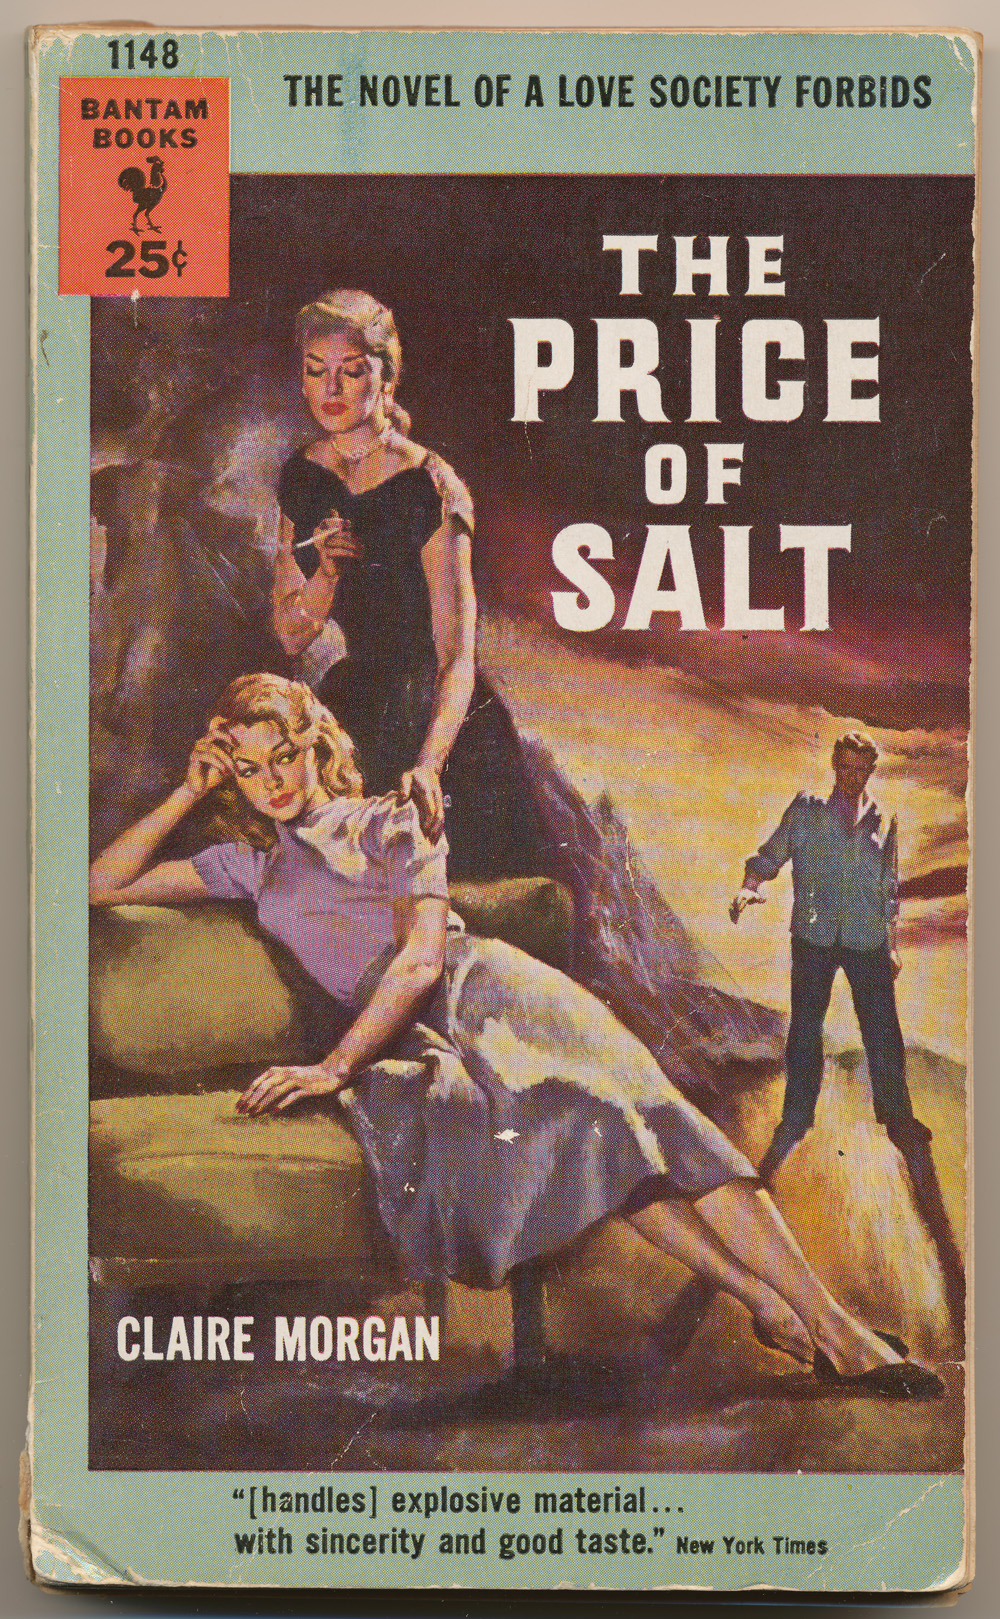 the price of salt book